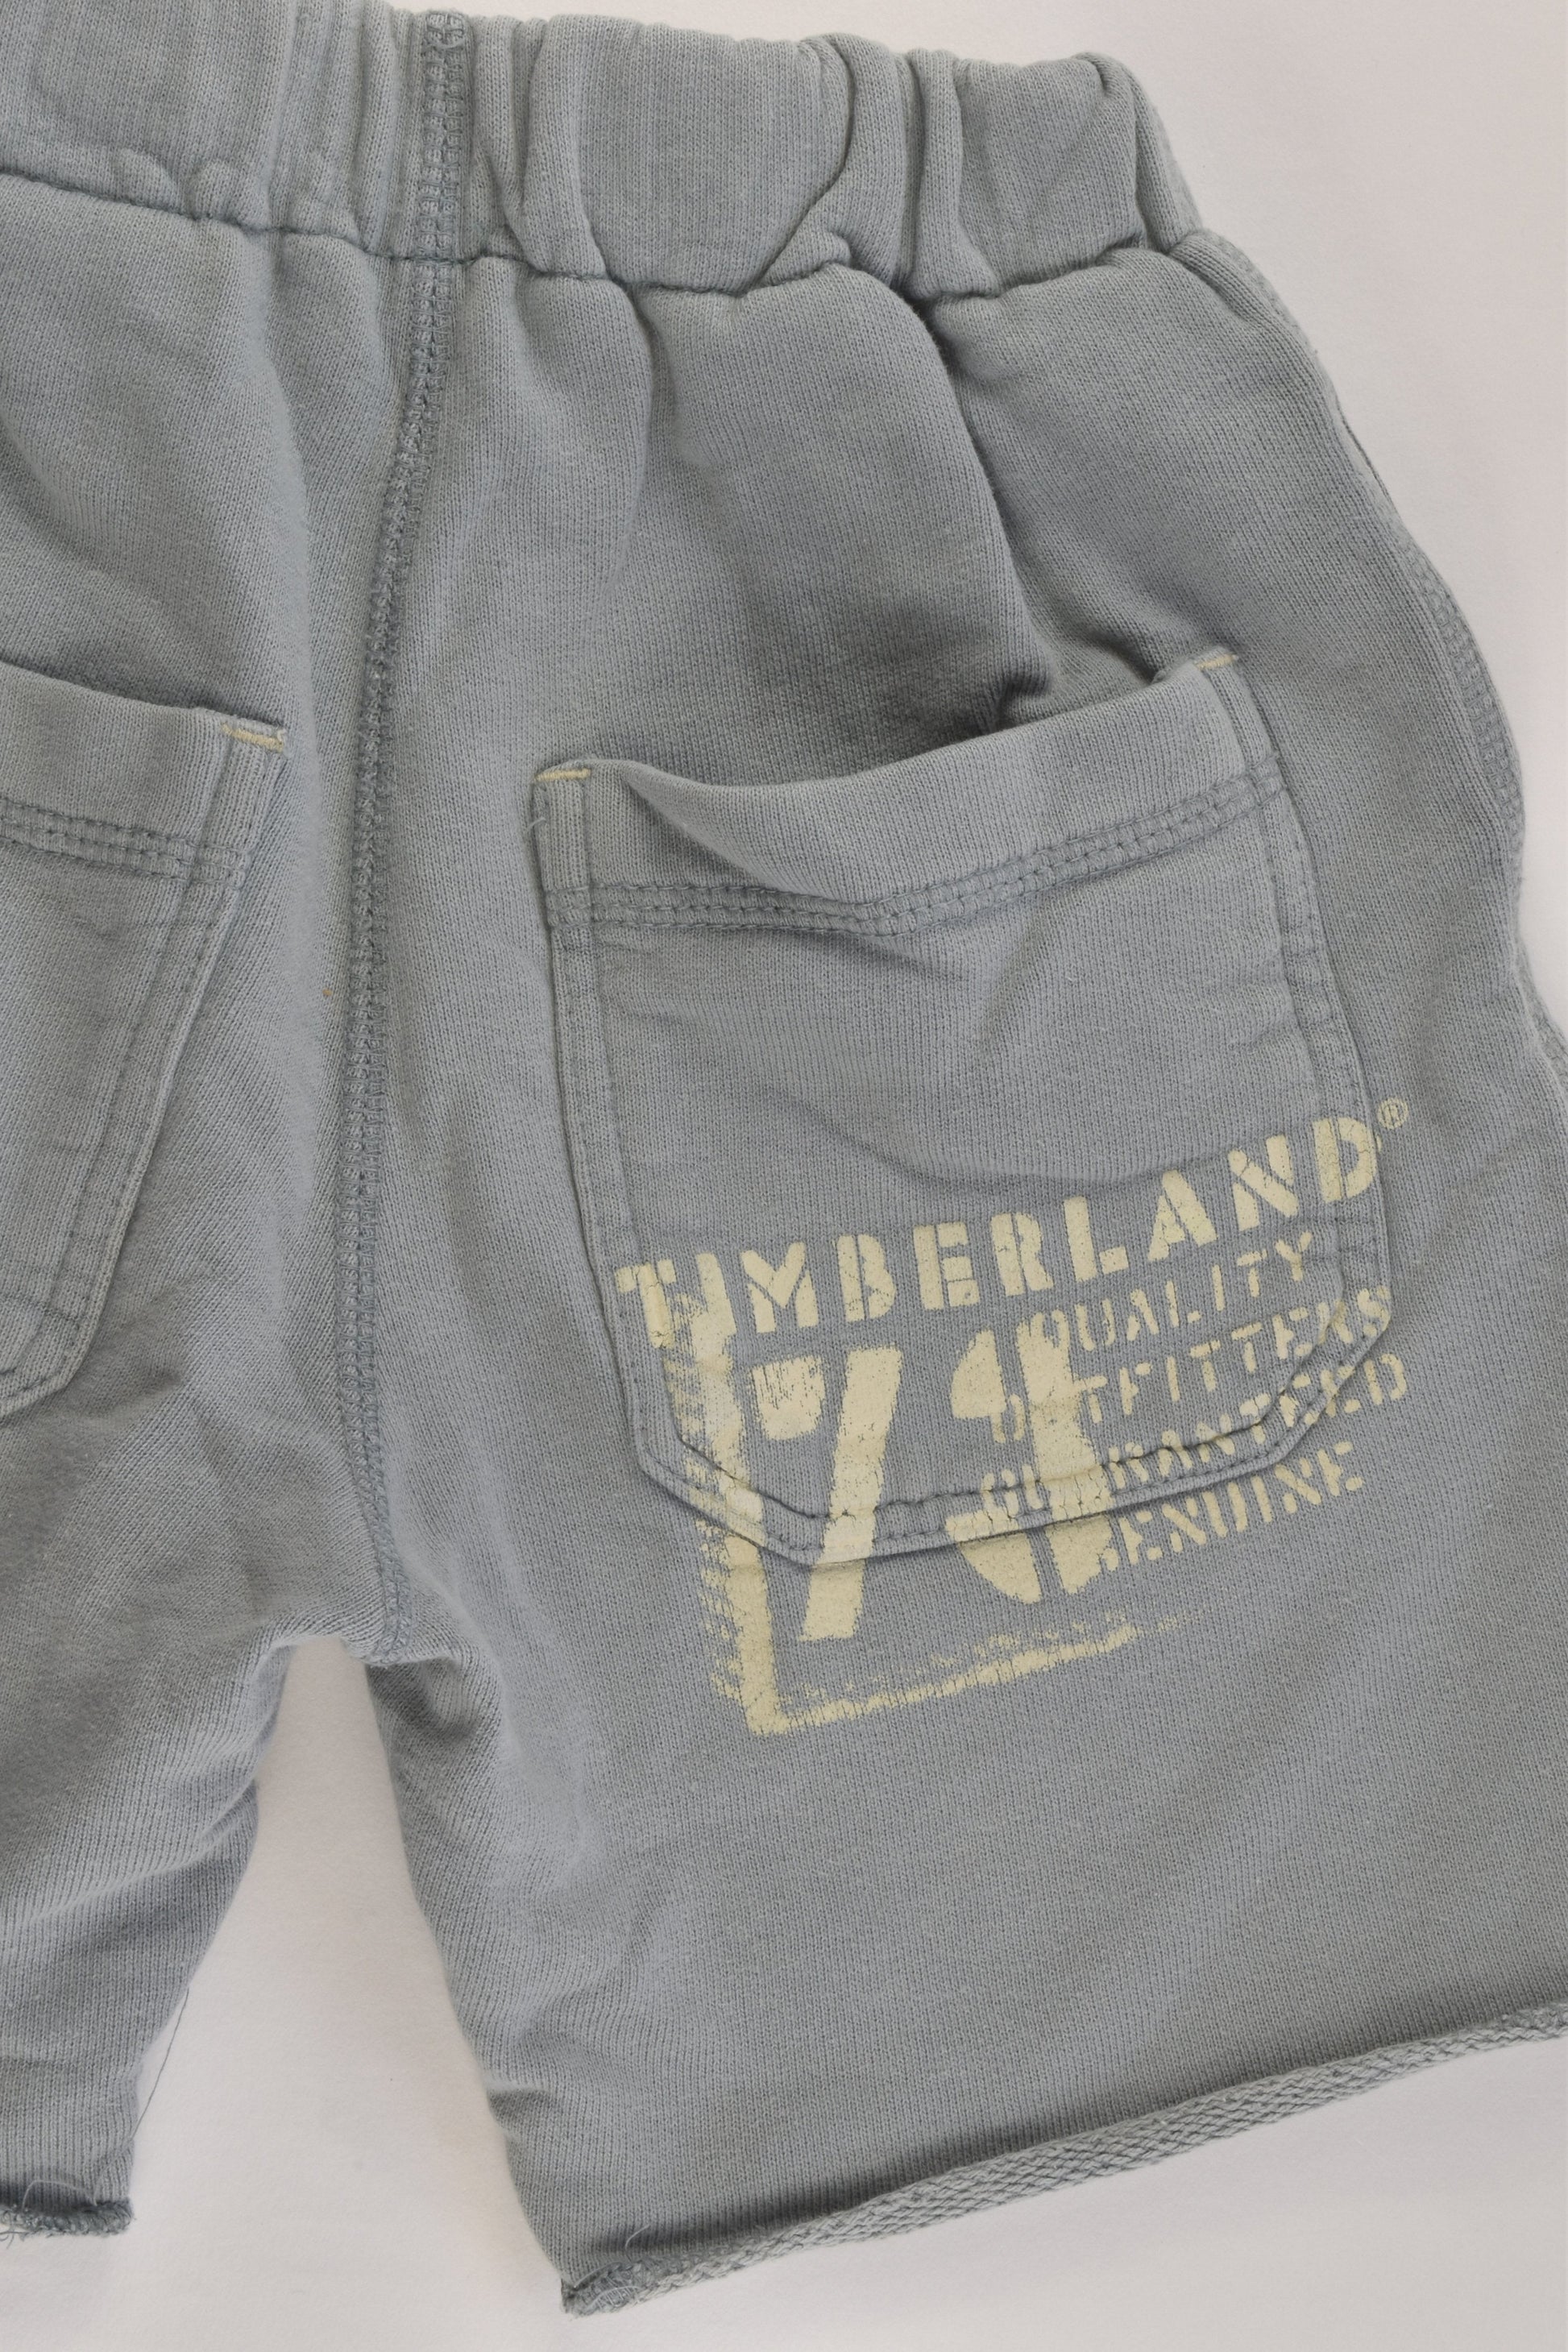 Timberland Size 1 (18 months) Shorts